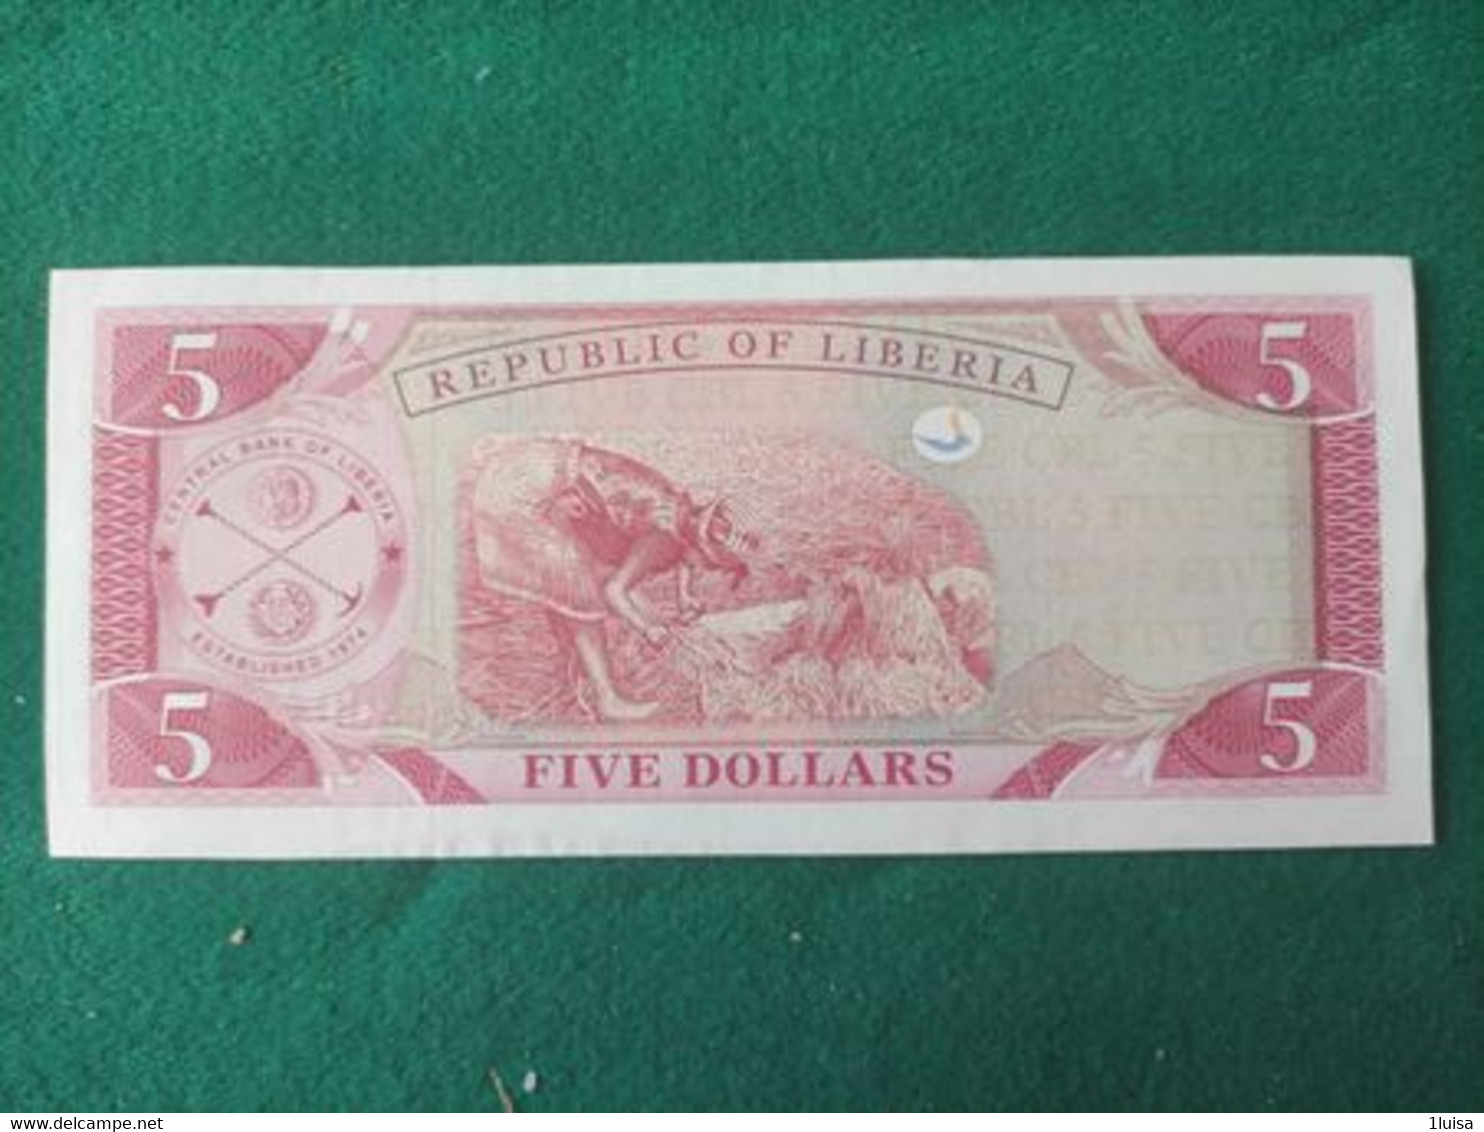 Liberia 5 DOLLARS 2003 - Liberia